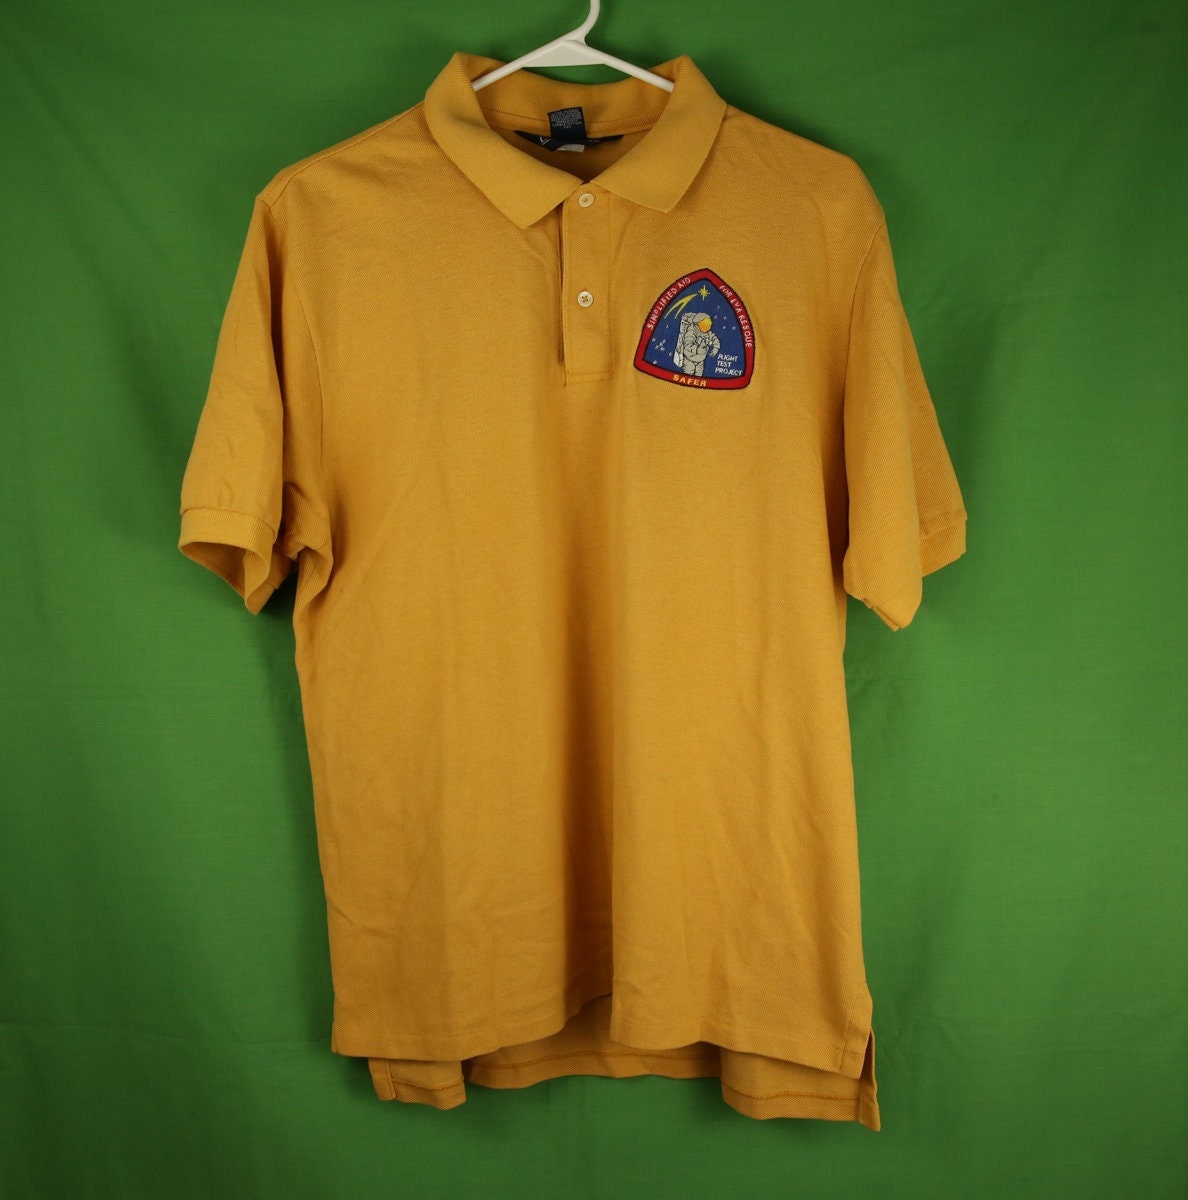 Kleding Herenkleding Overhemden & T-shirts Polos Vintage INDIA KATOEN POLO Shirt Heren Maat 2X xxl tot 3X Korte Mouw Oranje Wit 100 Procent India Katoen Golf Casual Prep Athlete School 